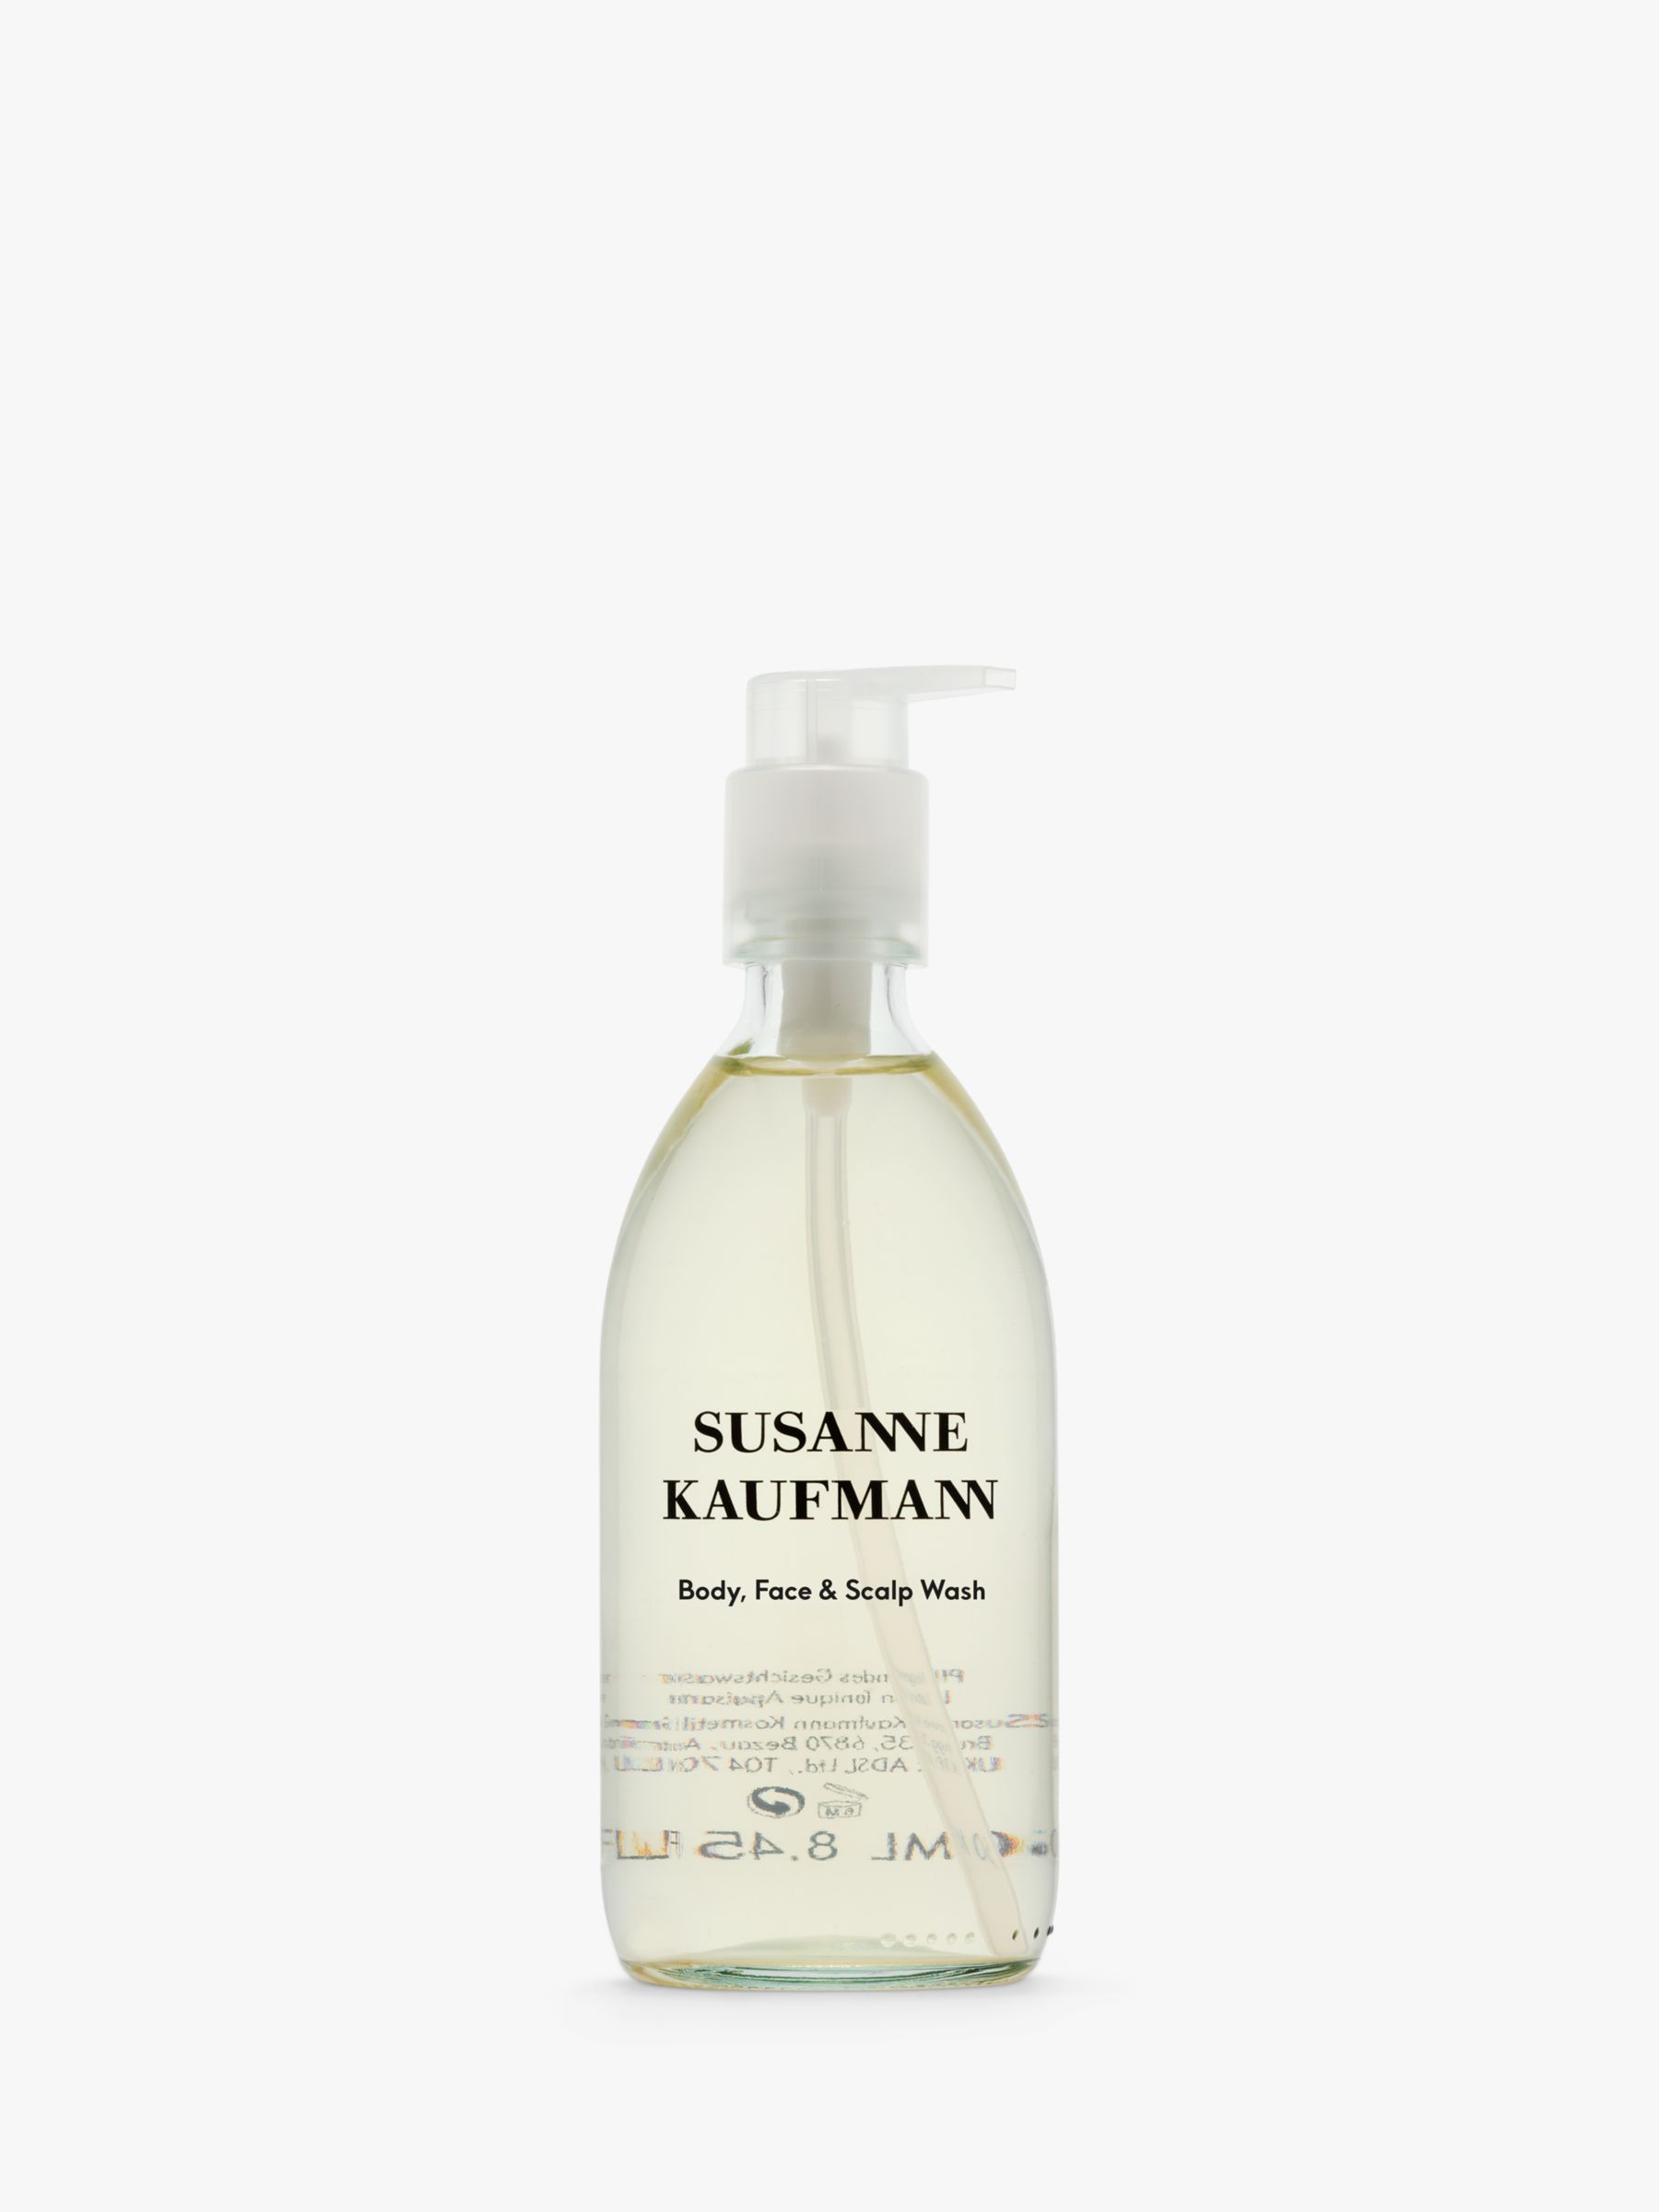 Susanne Kaufmann Hypersensitive Body, Face & Scalp Wash, 250ml 1